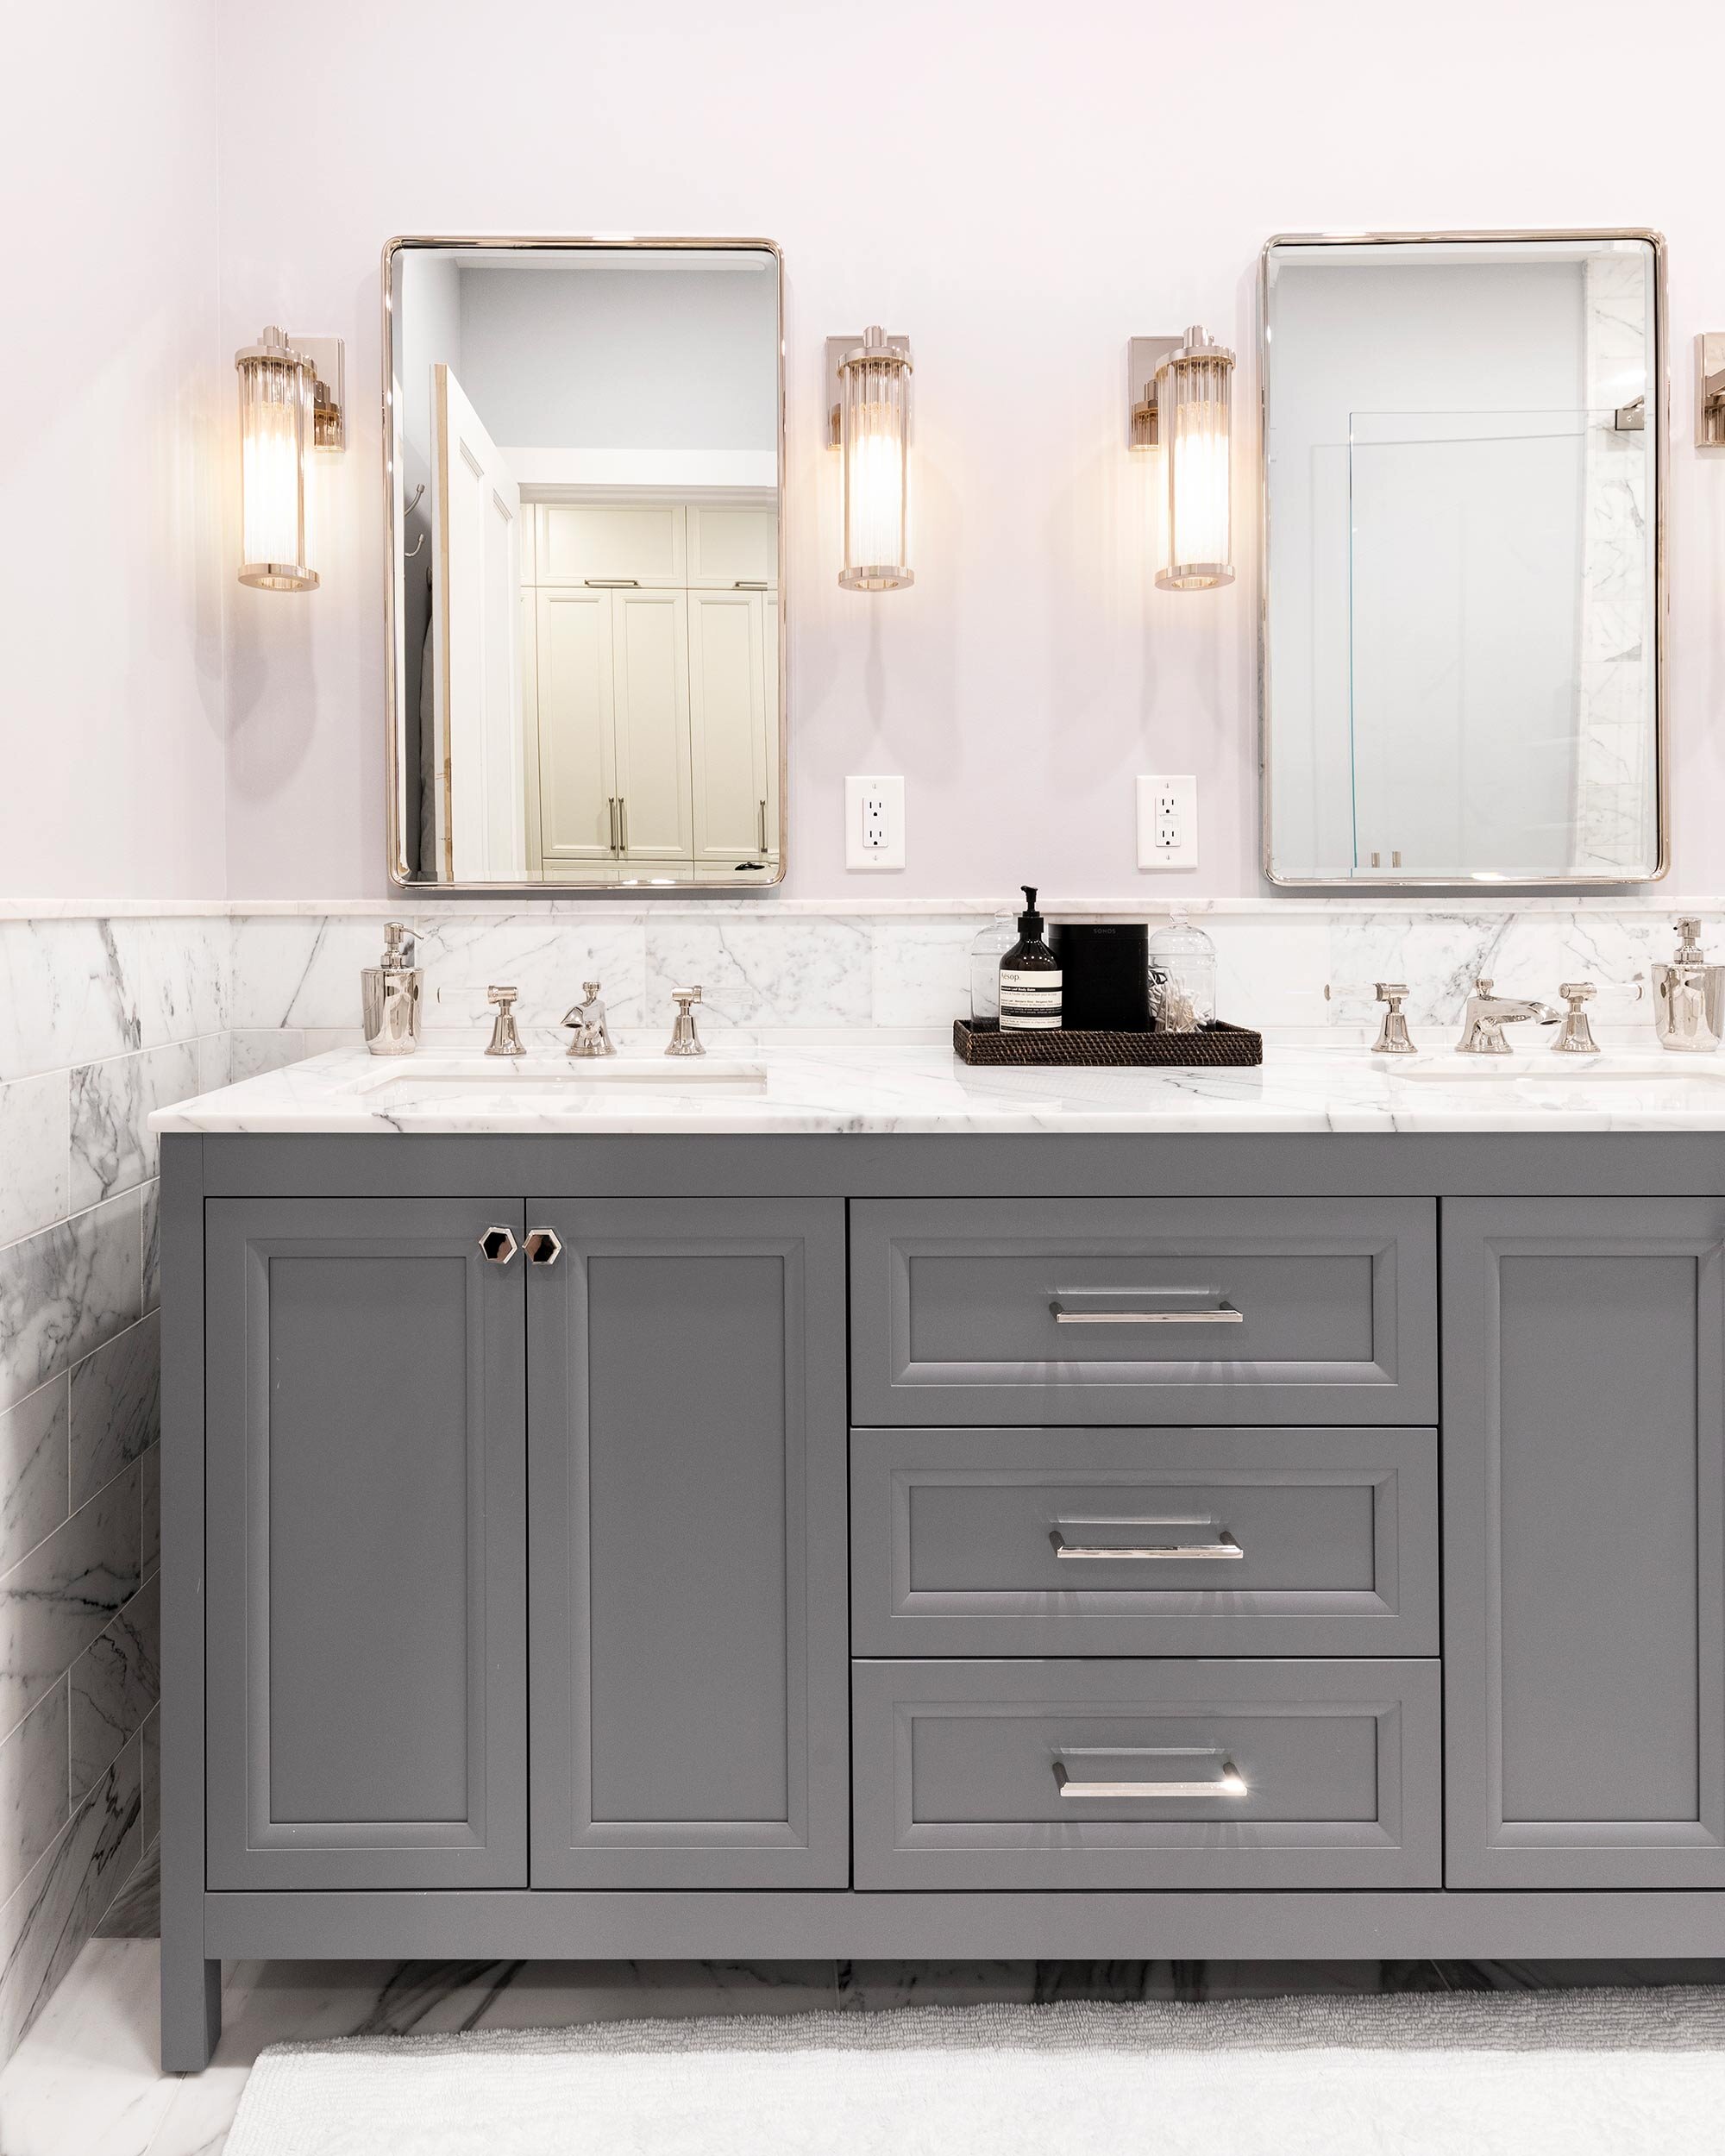 thompson-renovations-contractor-home-master-bathroom-hoboken-townhouse-interior-design-shower-custom-vanity.jpg